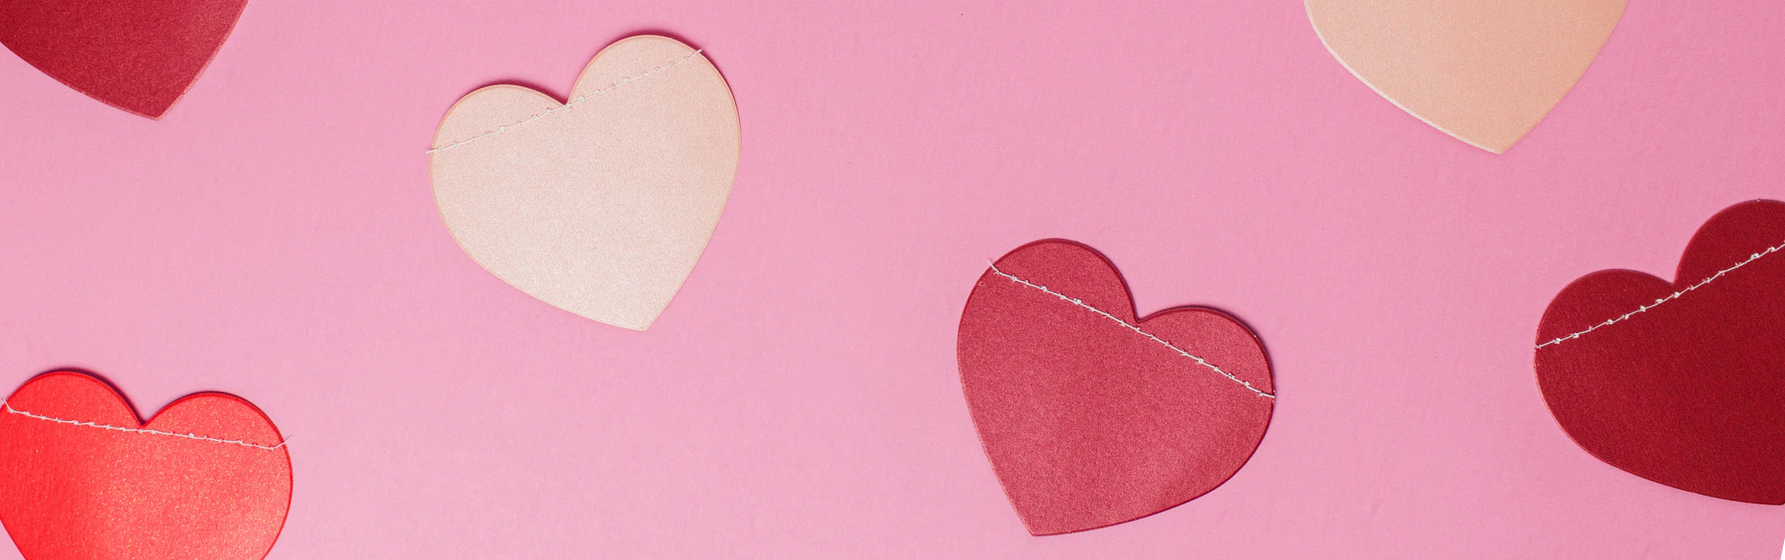 Free Ways to Celebrate Valentine's Day - Cheap Valentine's Day Gifts